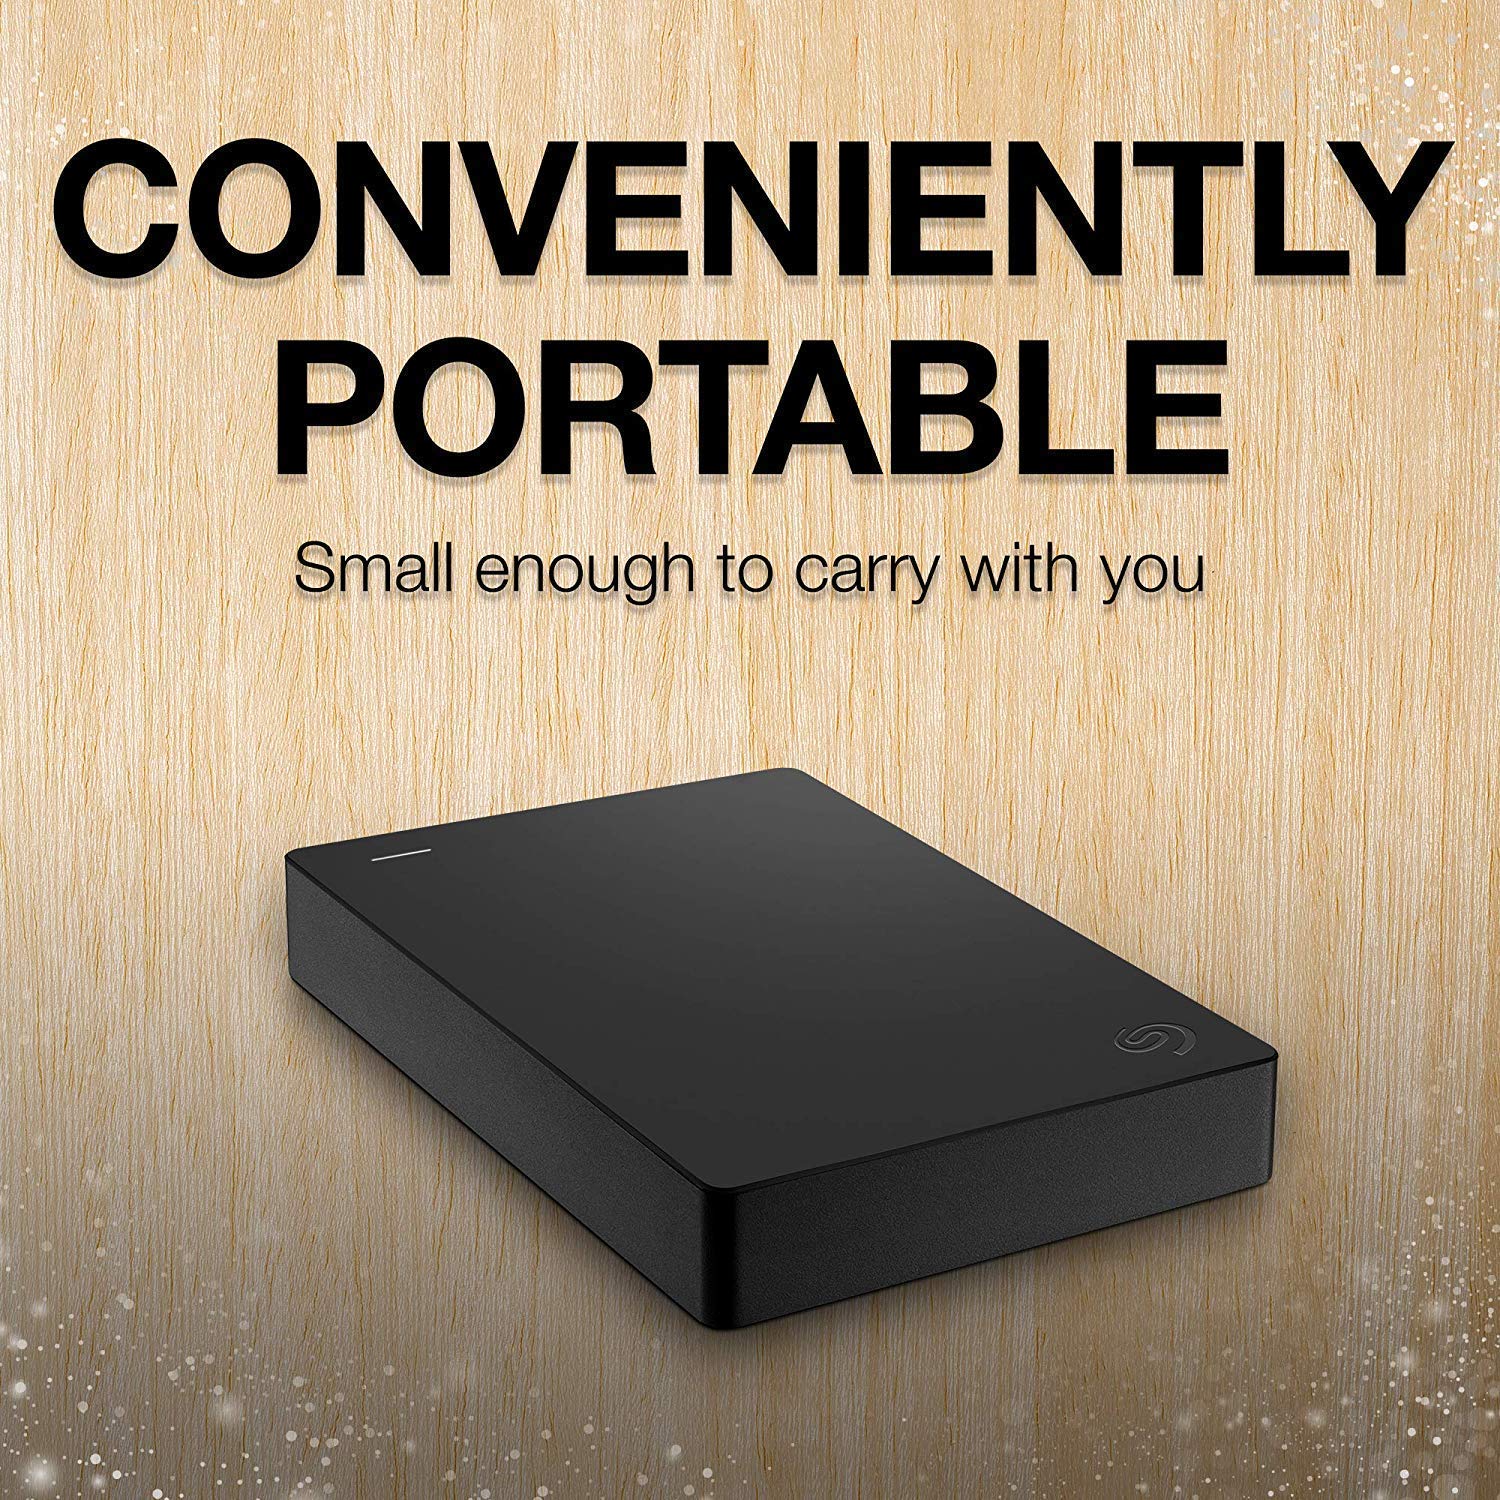 Seagate Portable 5TB External Hard Drive HDD – USB 3.0 for PC, Mac, PS4, & Xbox - 1-Year Rescue Service (STGX5000400), Black